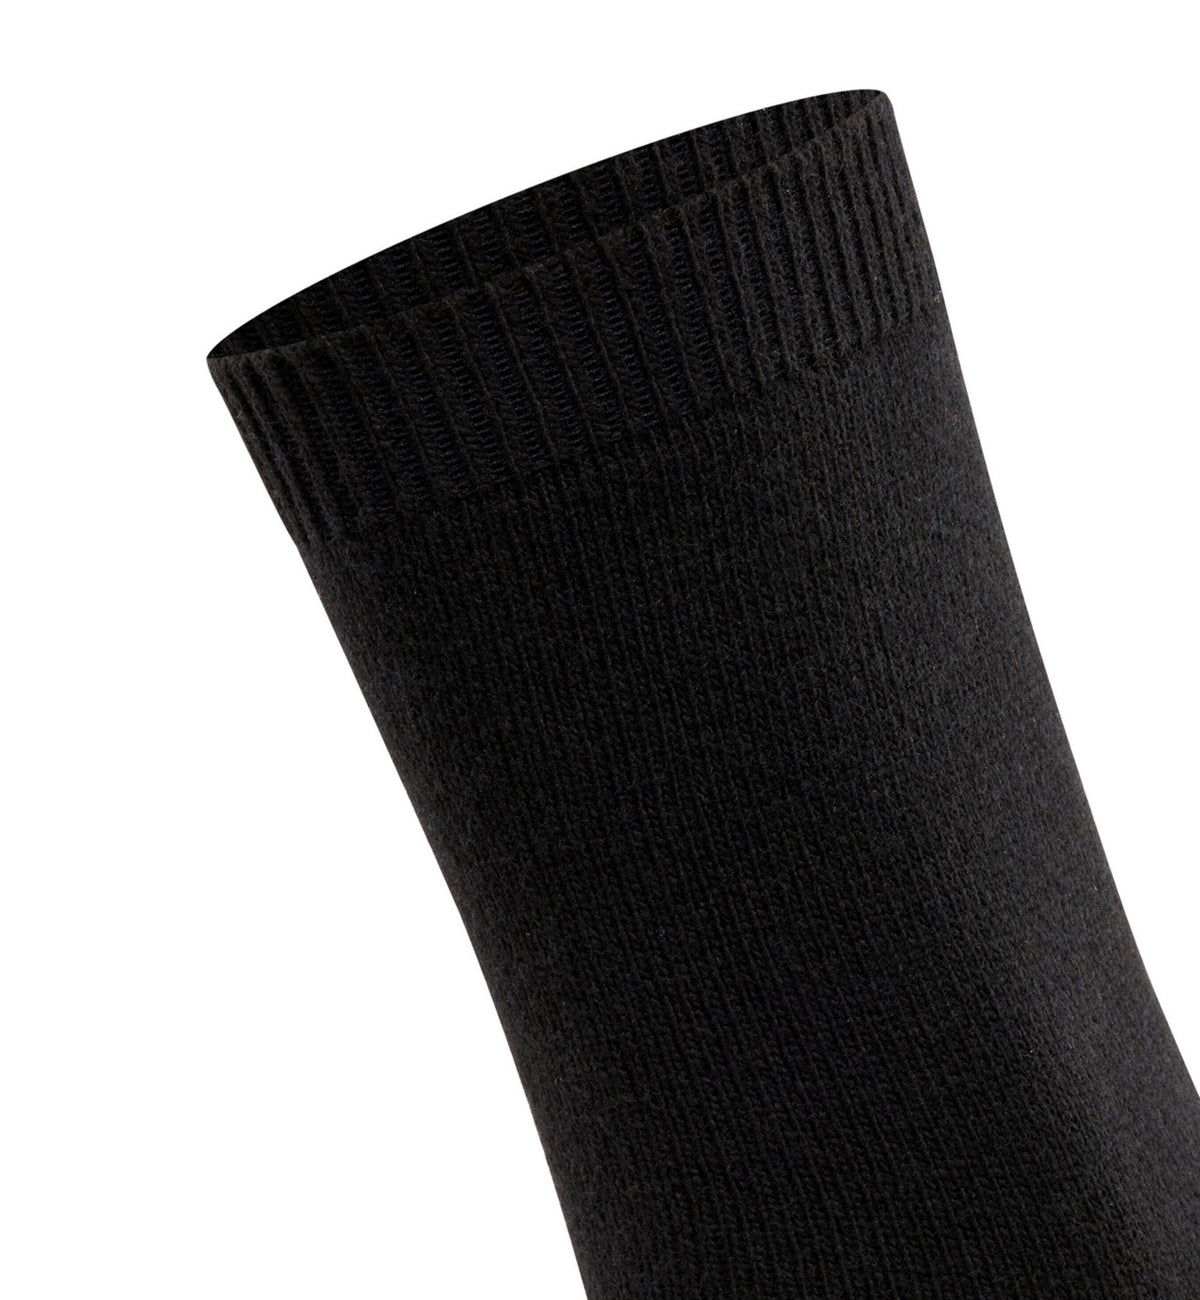 FALKE Cosy Wool Crew Socks (47548),5/7.5,Black - Black,5/7.5